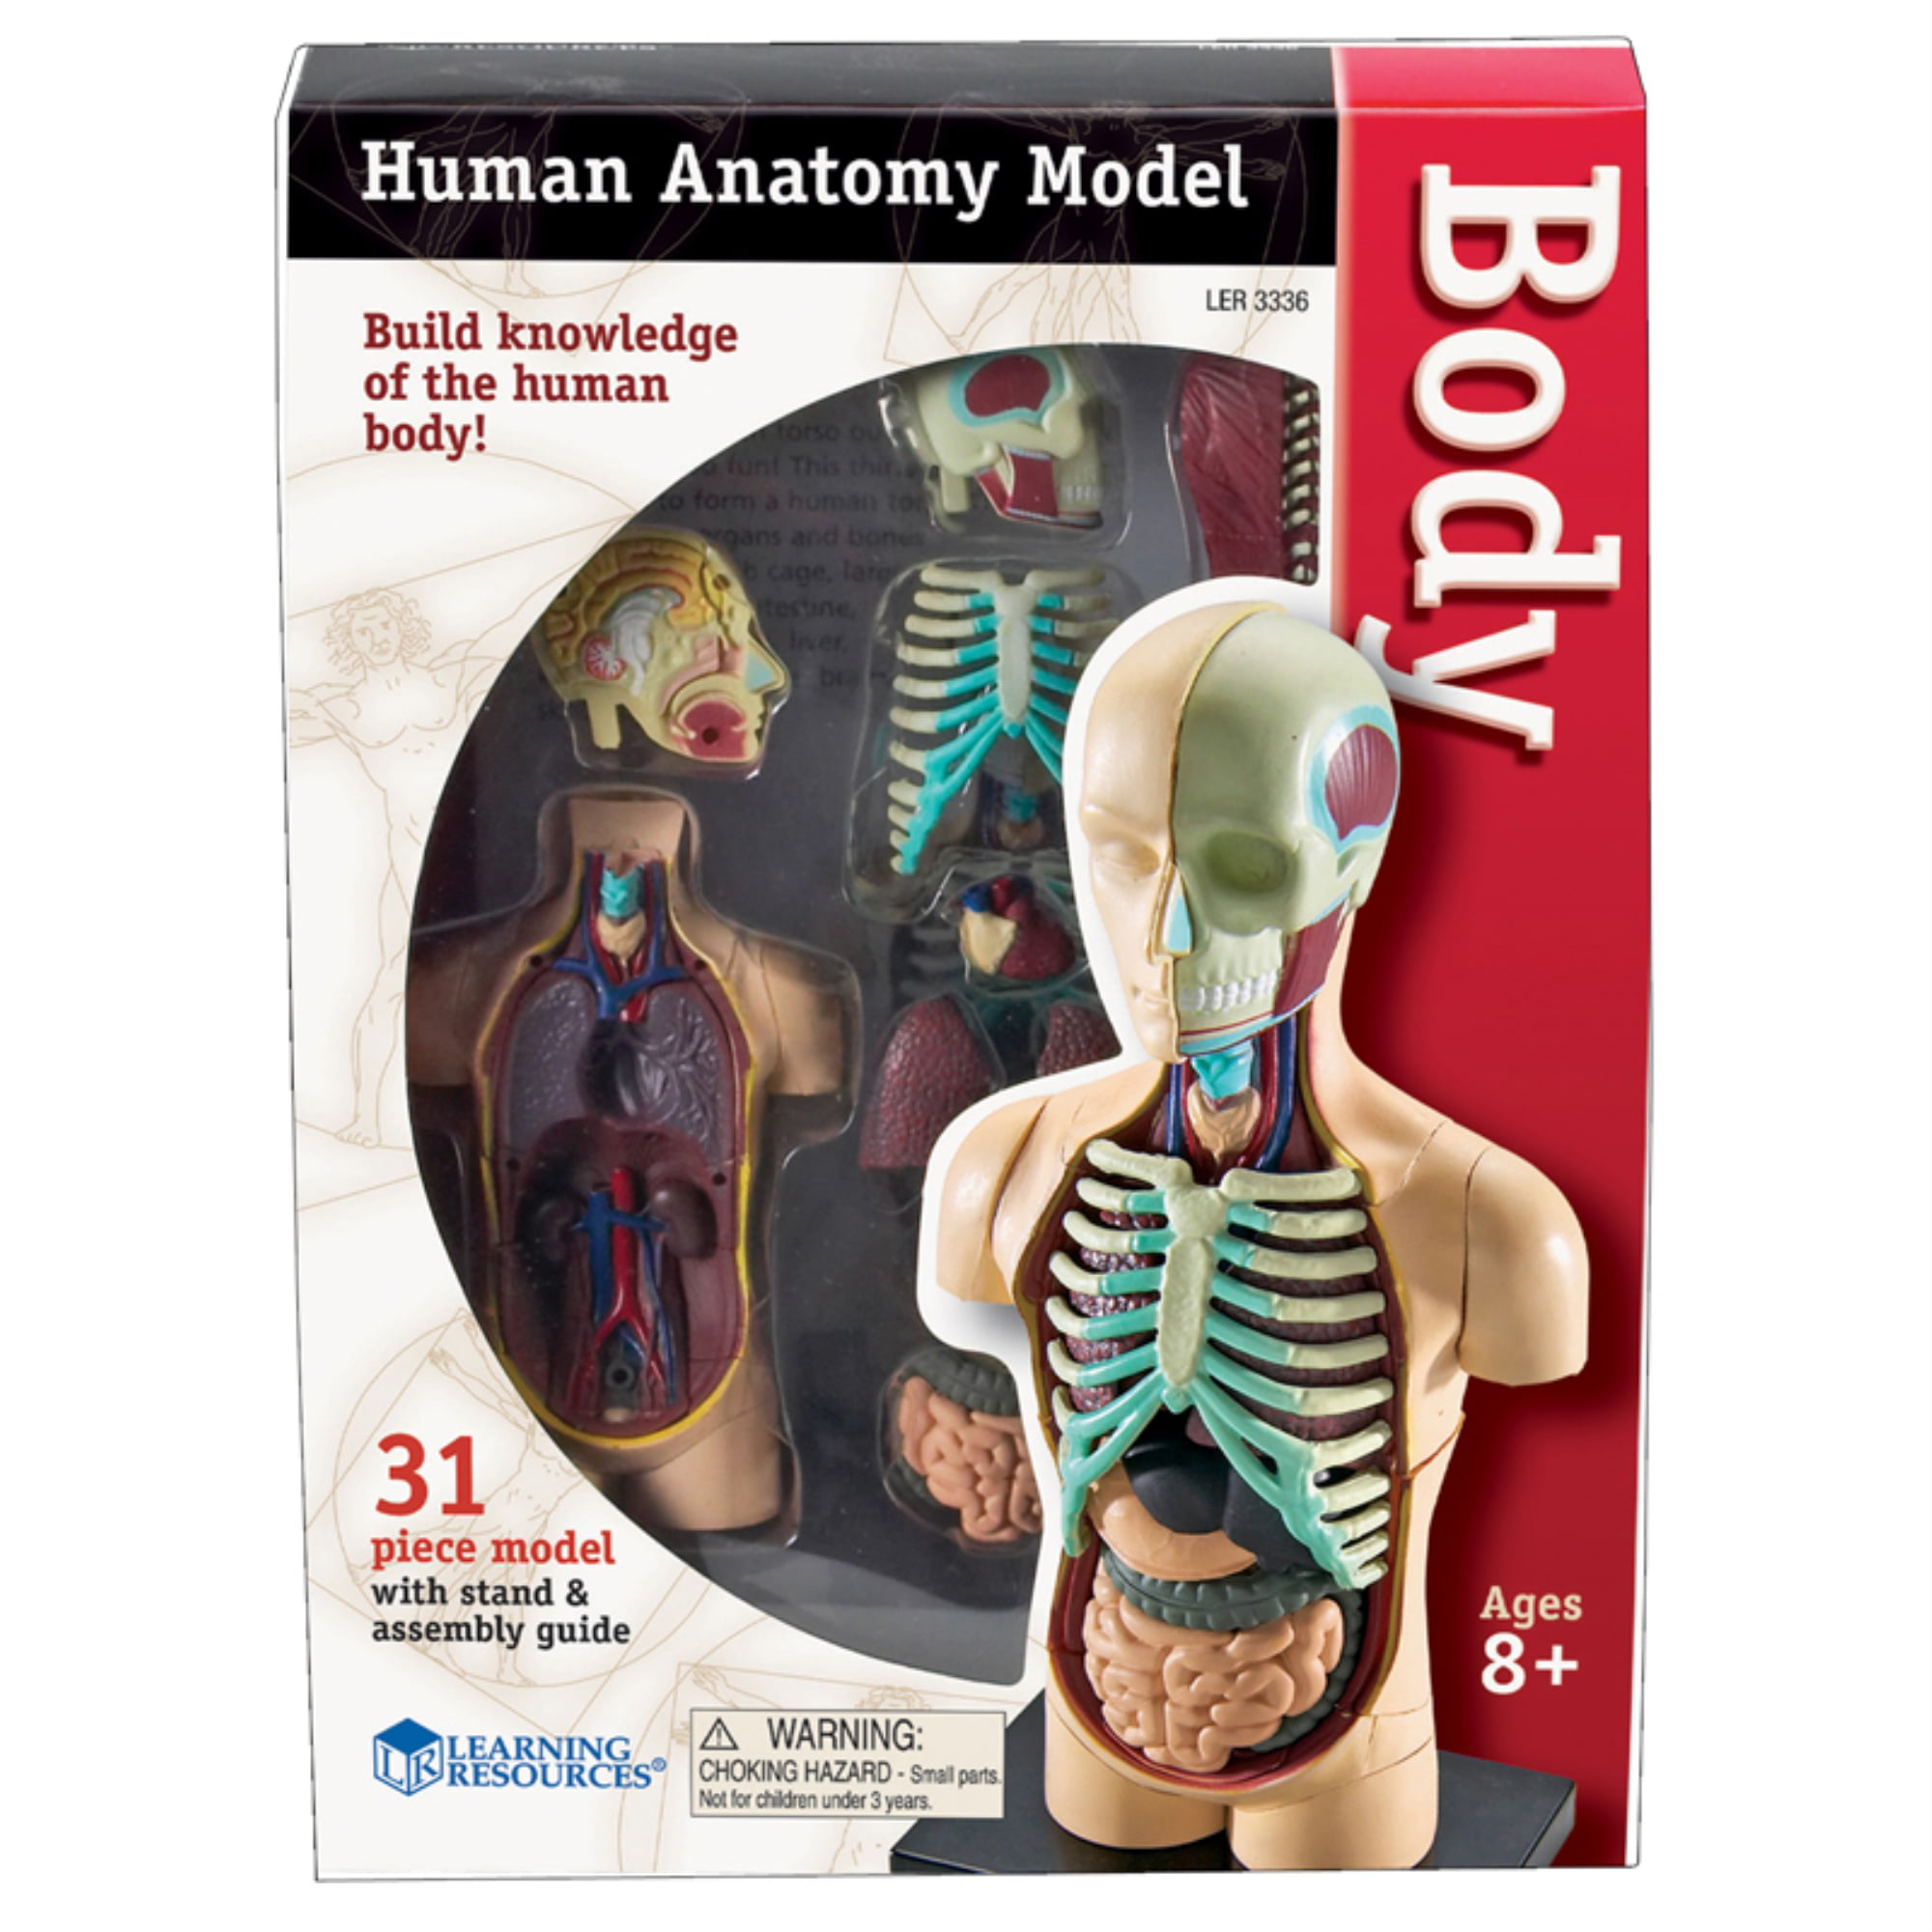 Body Anatomy Model Human Torso Body Model Anatomy Anatomical Medical Internal Organs for Teaching Kids Anatomy Education Toy 